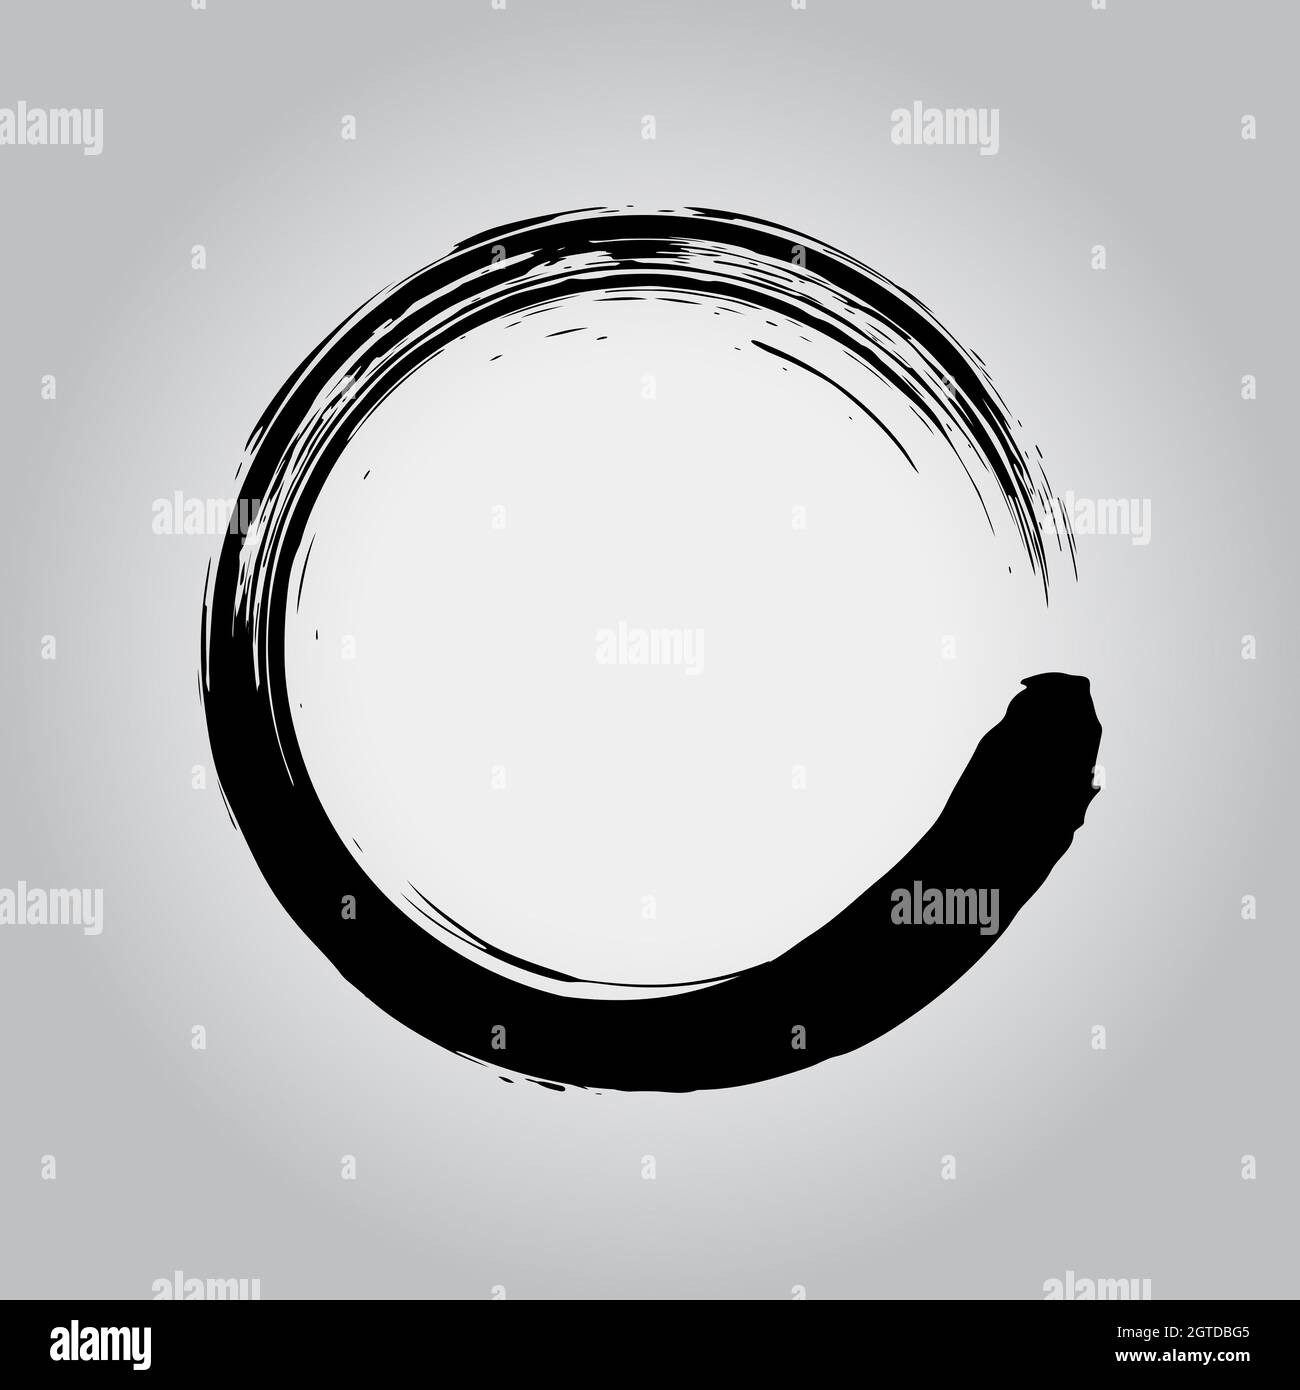 Black grunge Zen ring shape. Black Enso Zen symbol. Circular label, logo, text frame, banner, badge. Grunge design element. Isolated. Distress texture Stock Vector